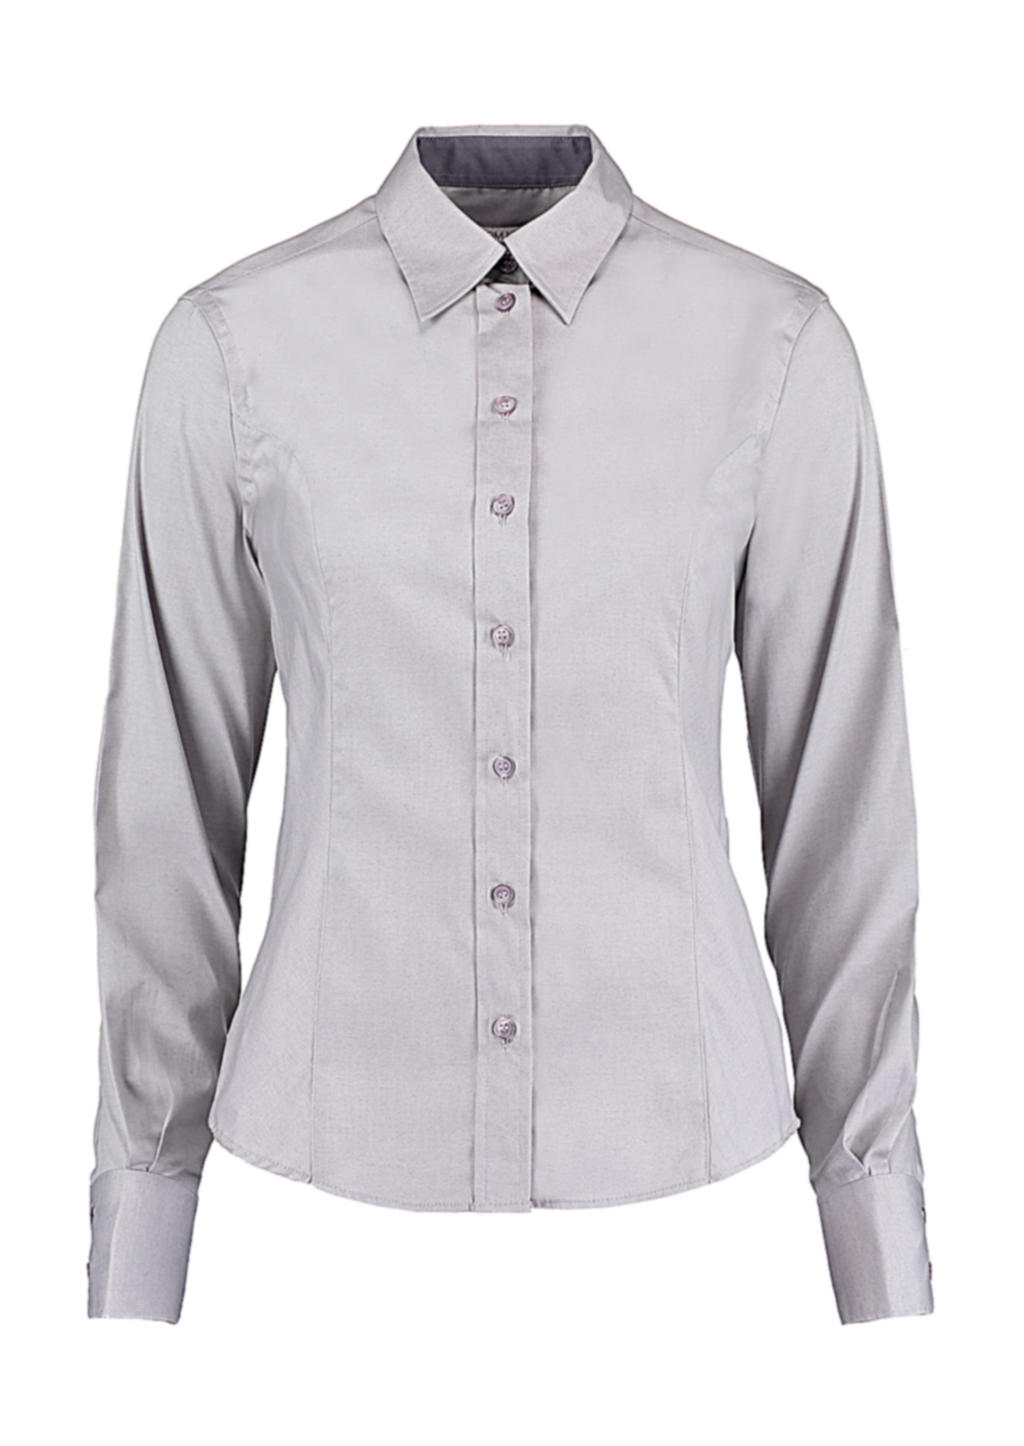 Dámska košeľa Contrast Premium Oxford LS - silver grey/charcoal